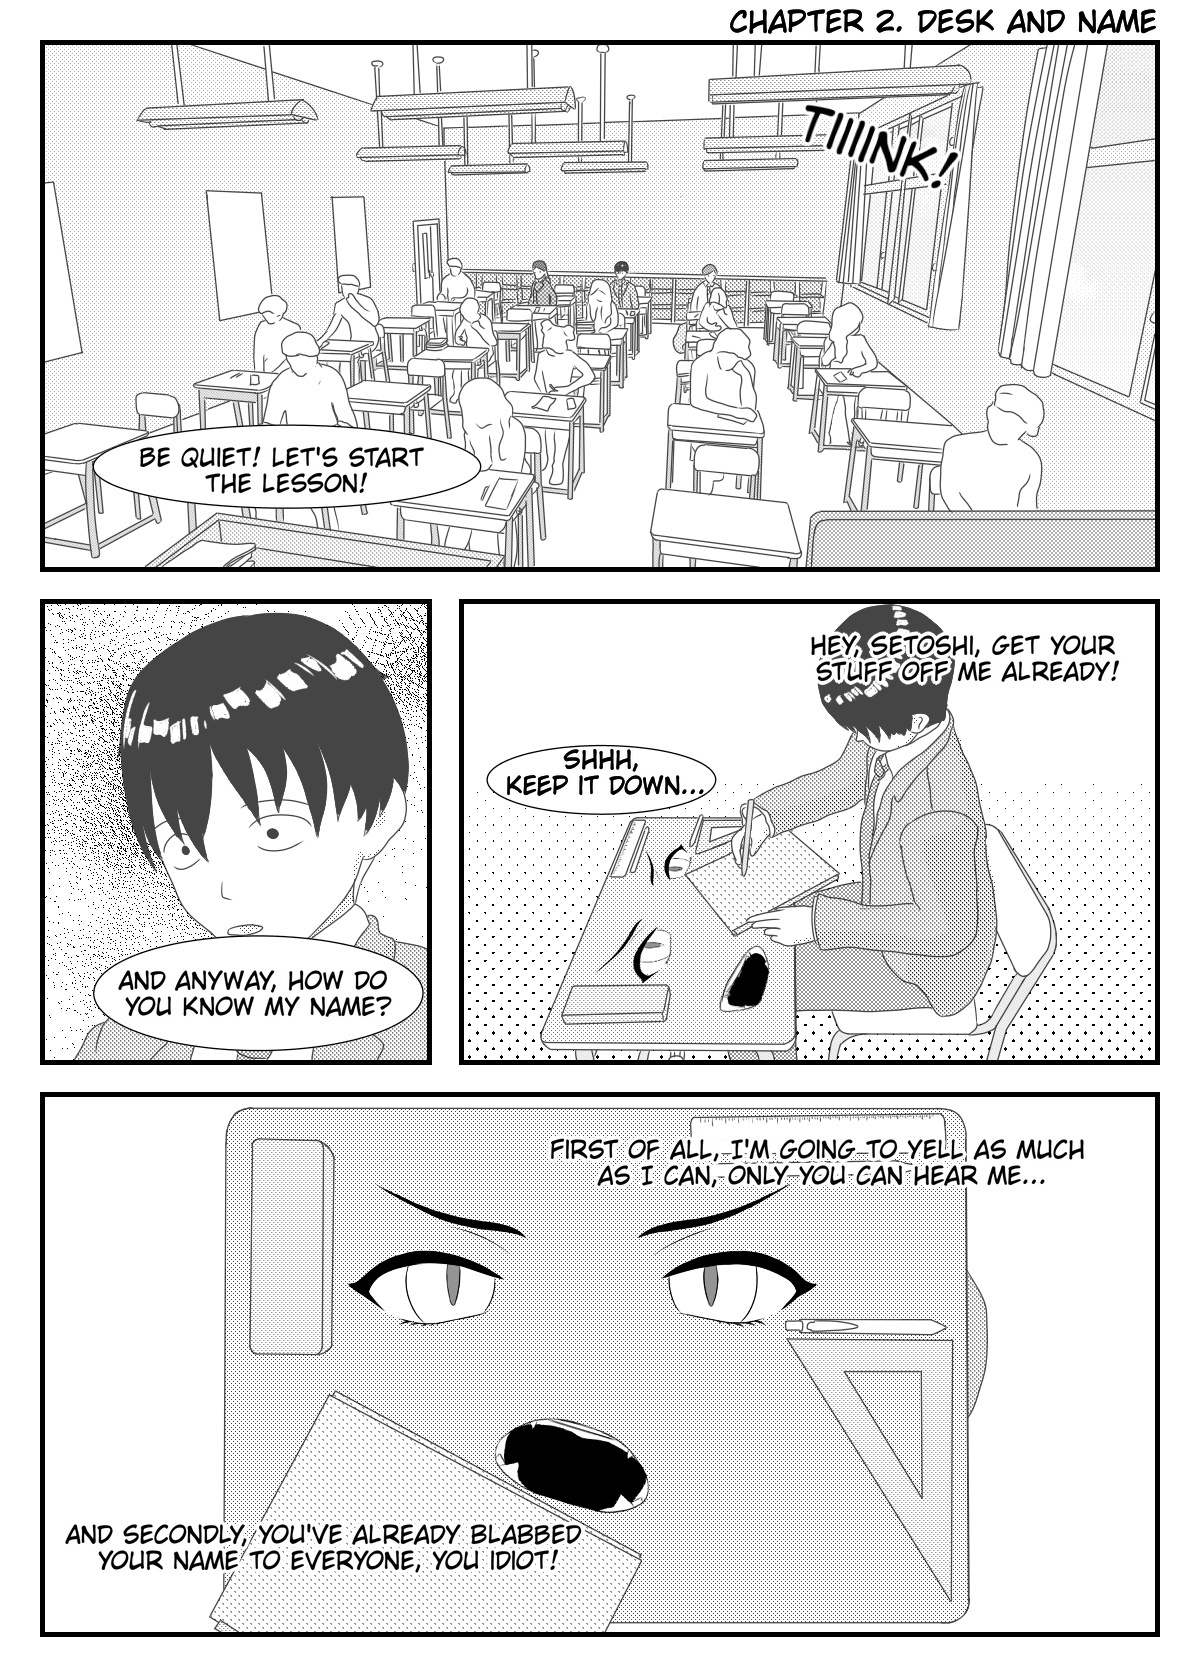 My School Desk - The Demon! - Page 1